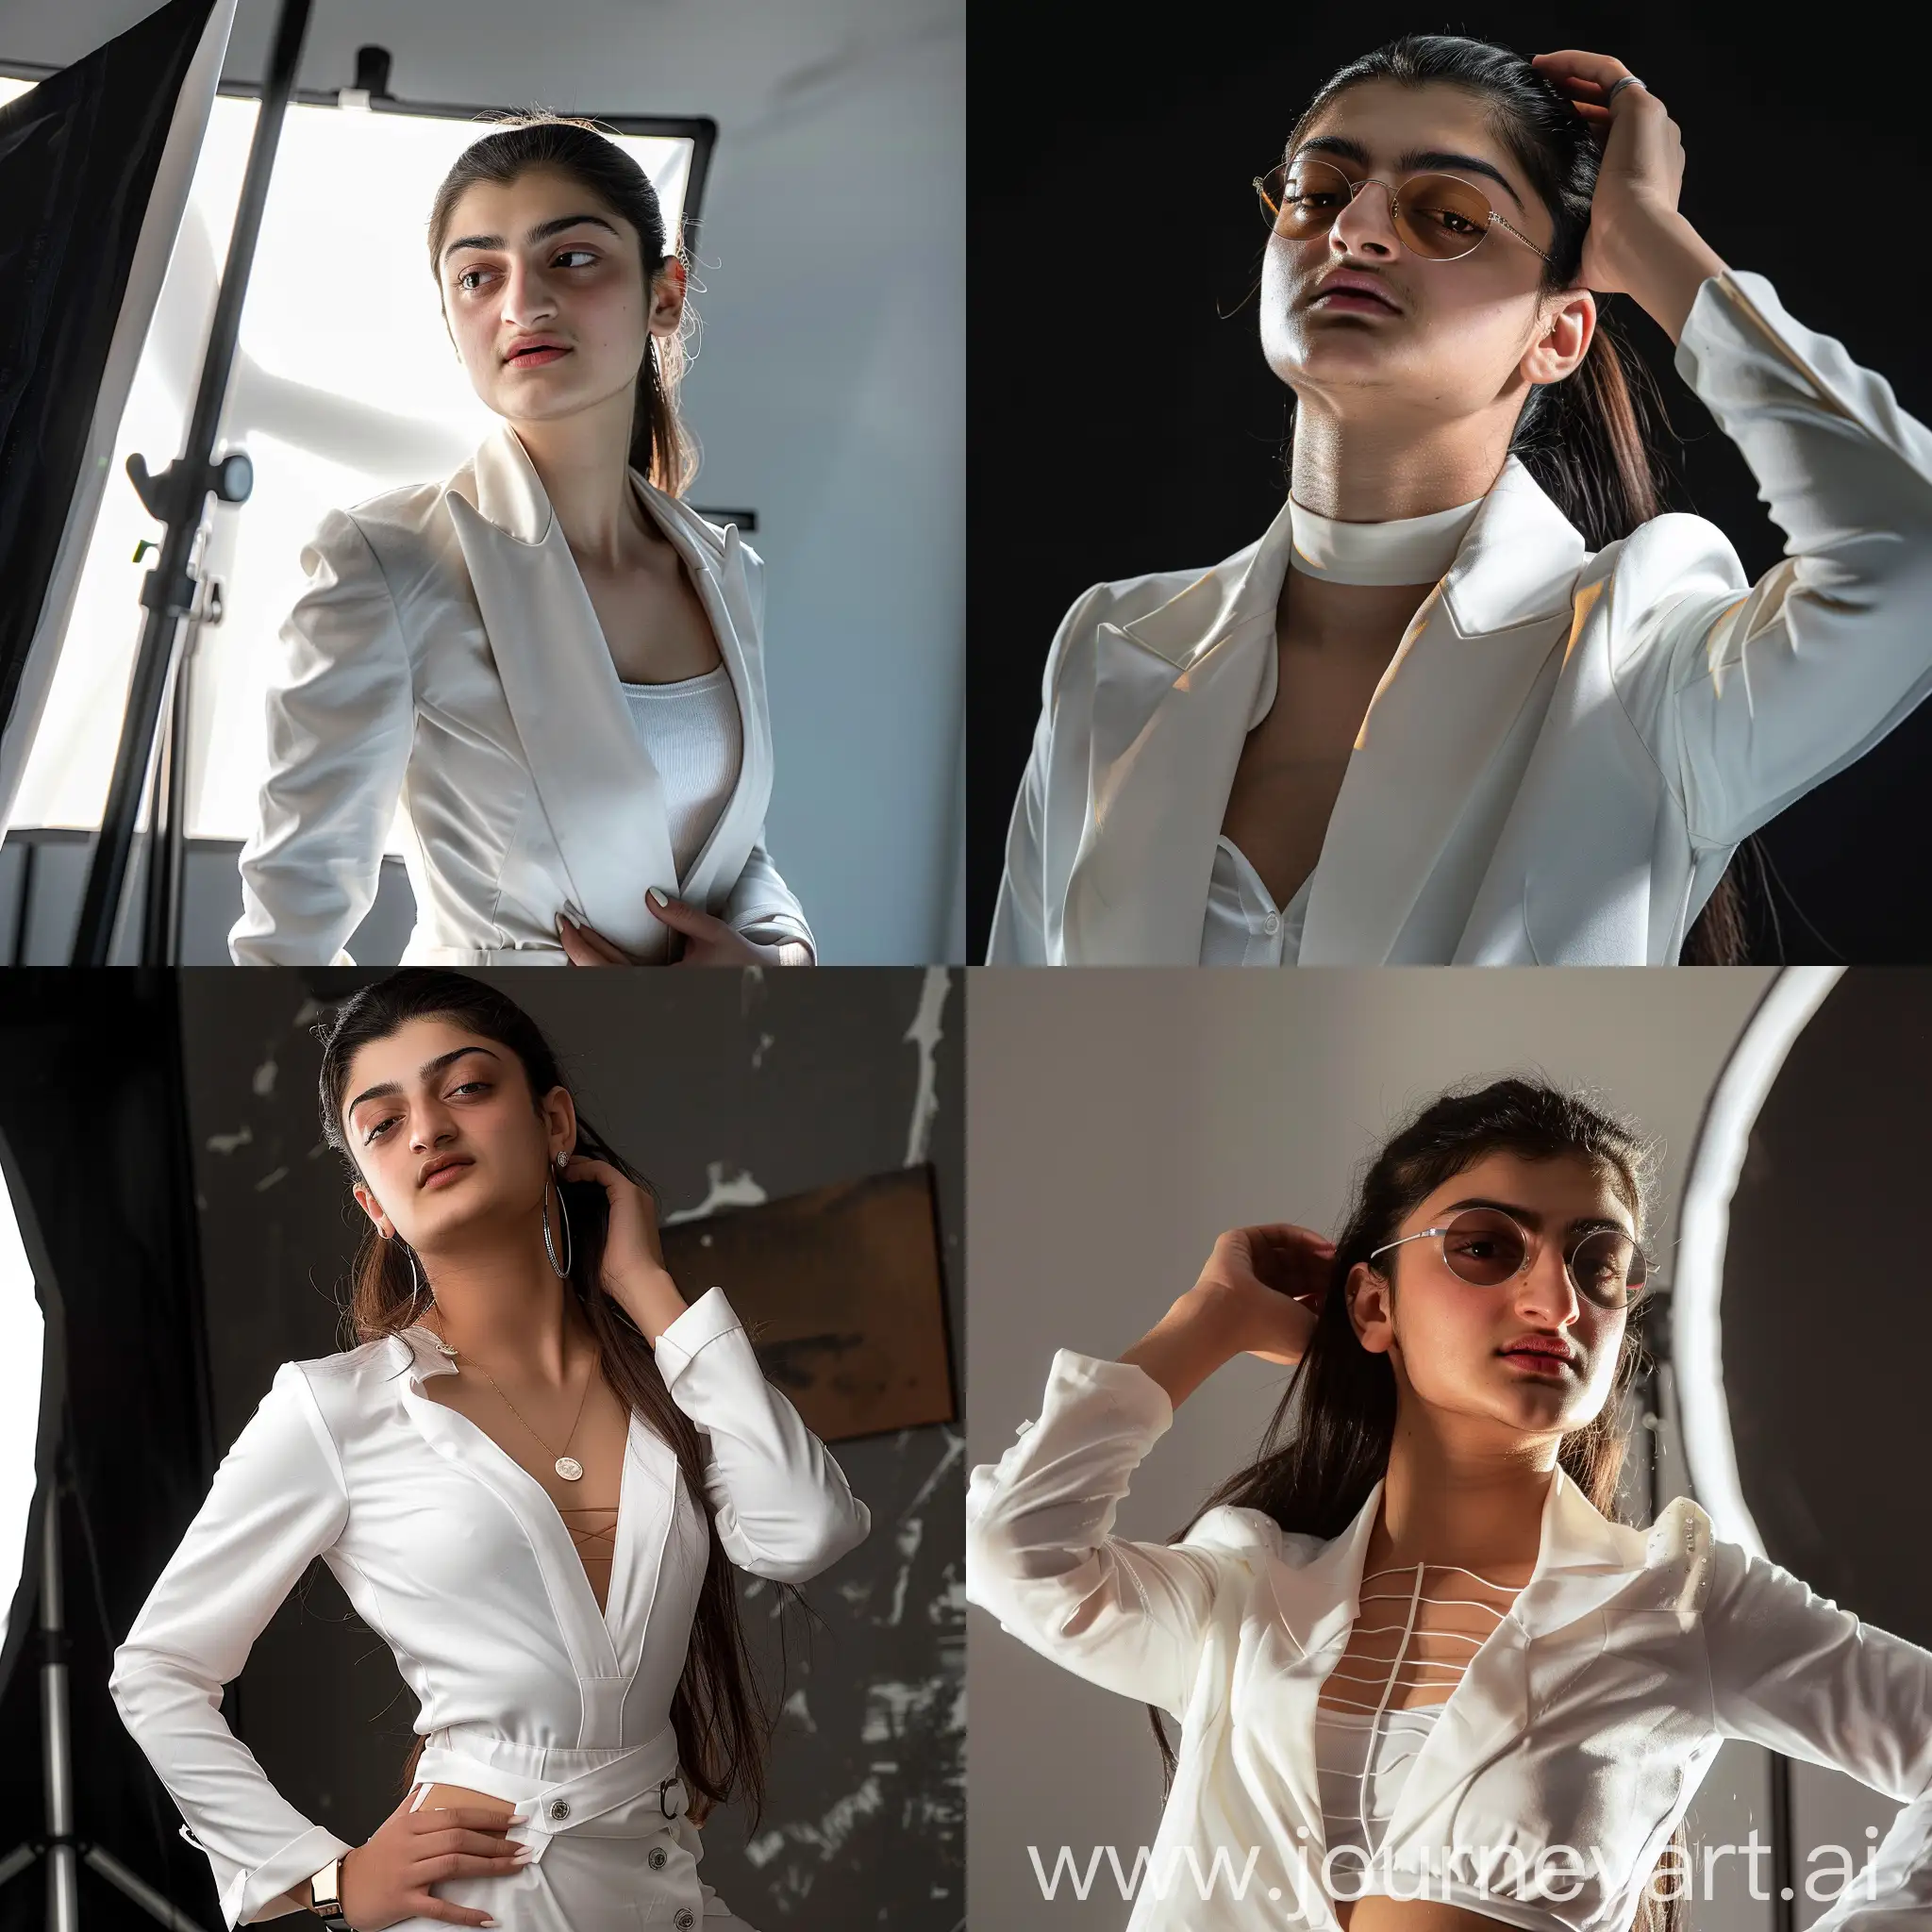 Stylish-Woman-in-White-Striking-Boss-Poses-Studio-Photoshoot